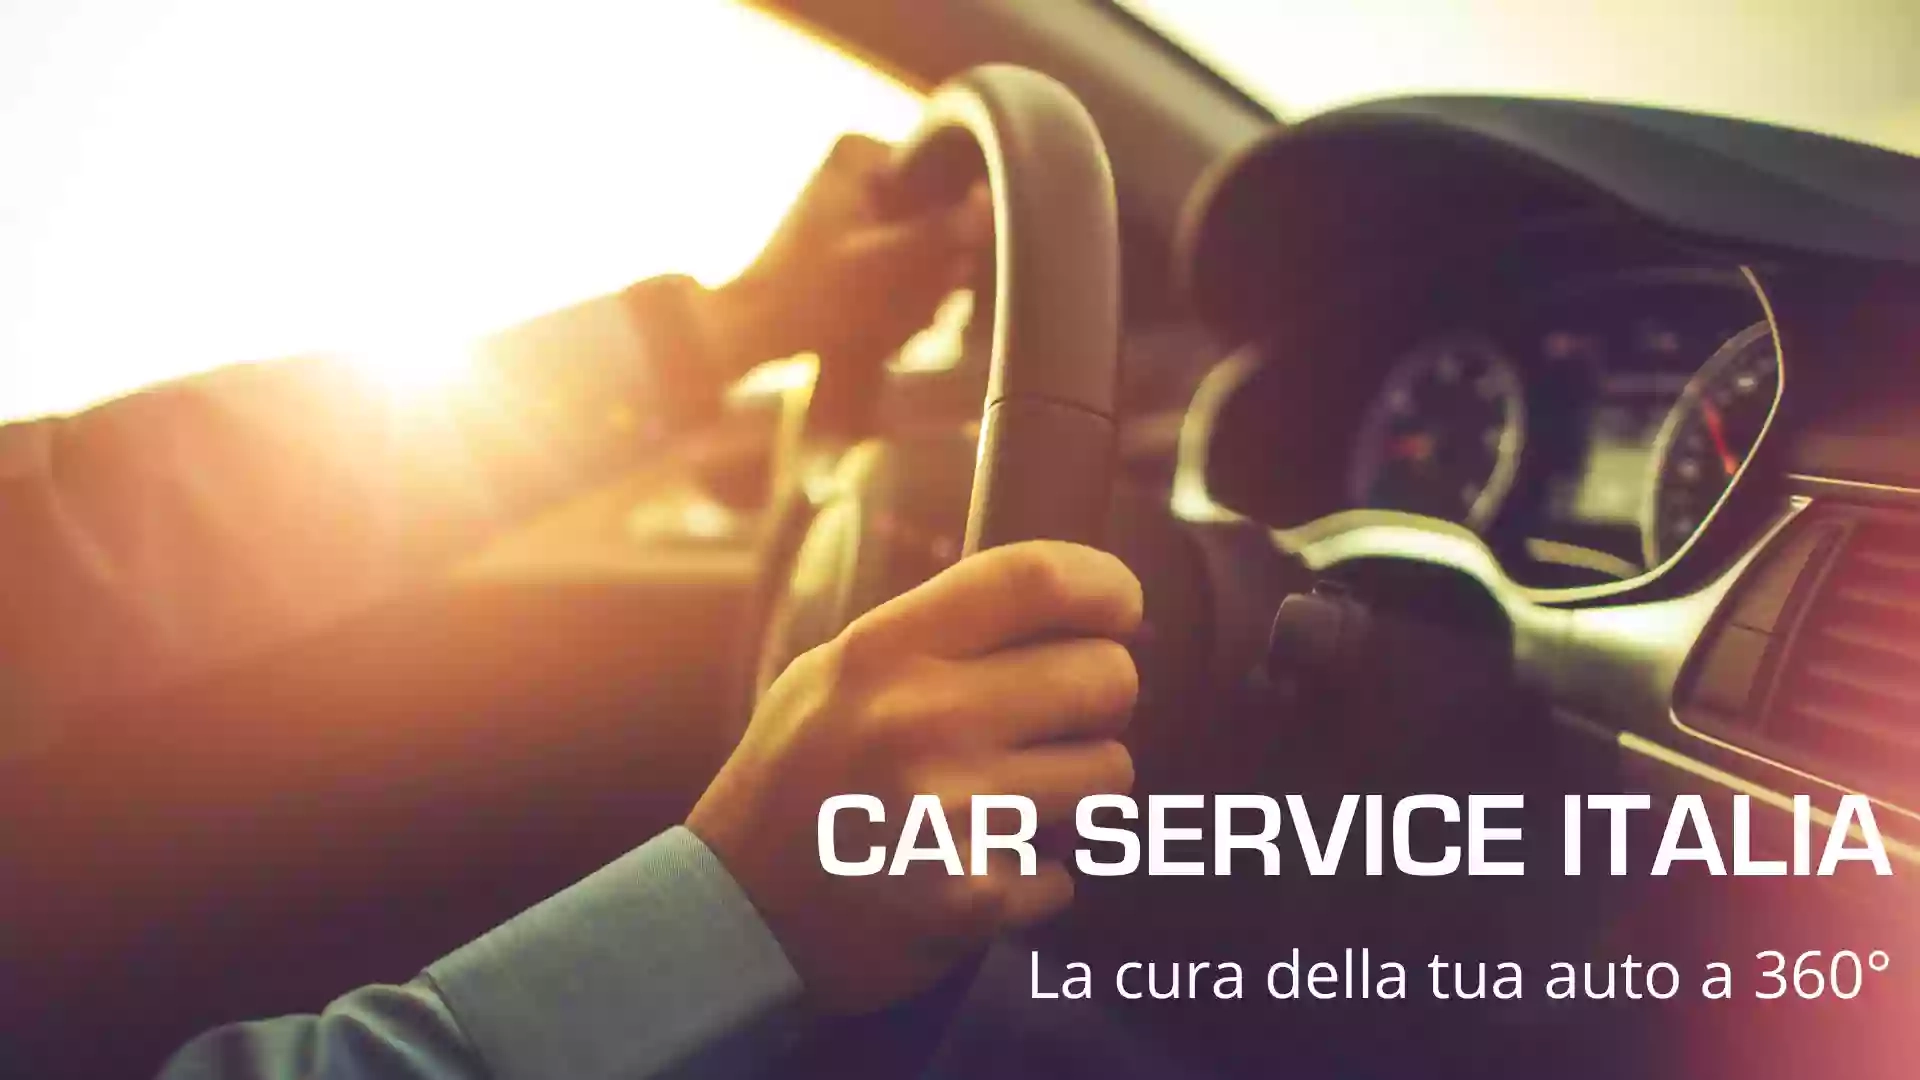 Car Service Italia